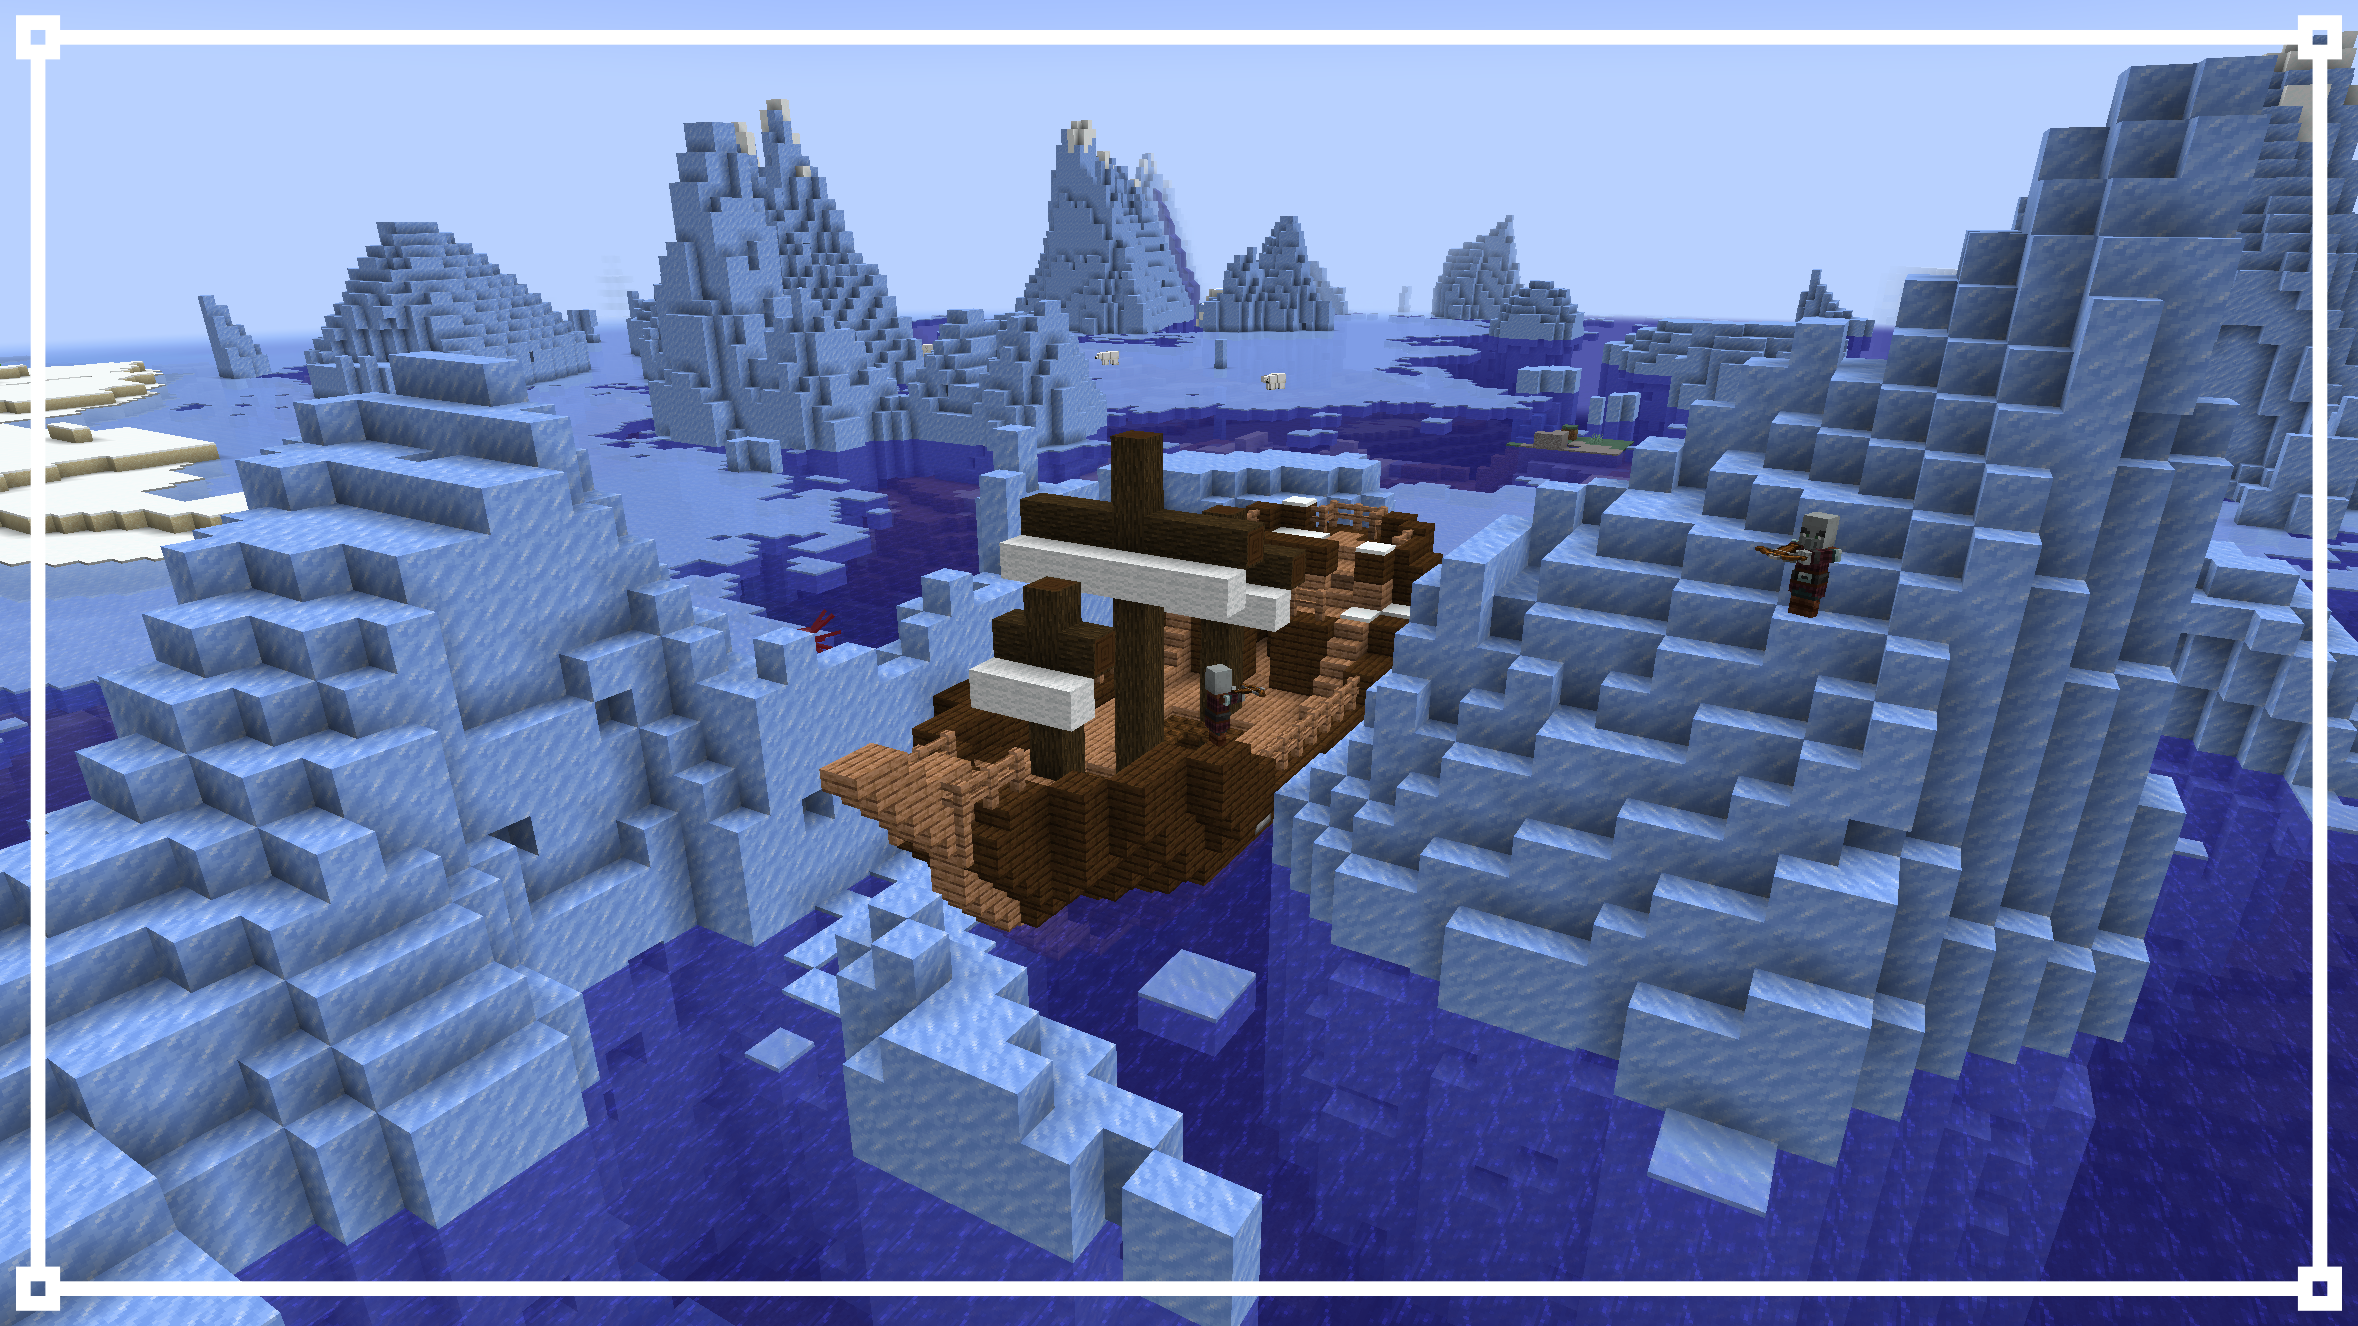 A pirate ship stuck in an iceberg.